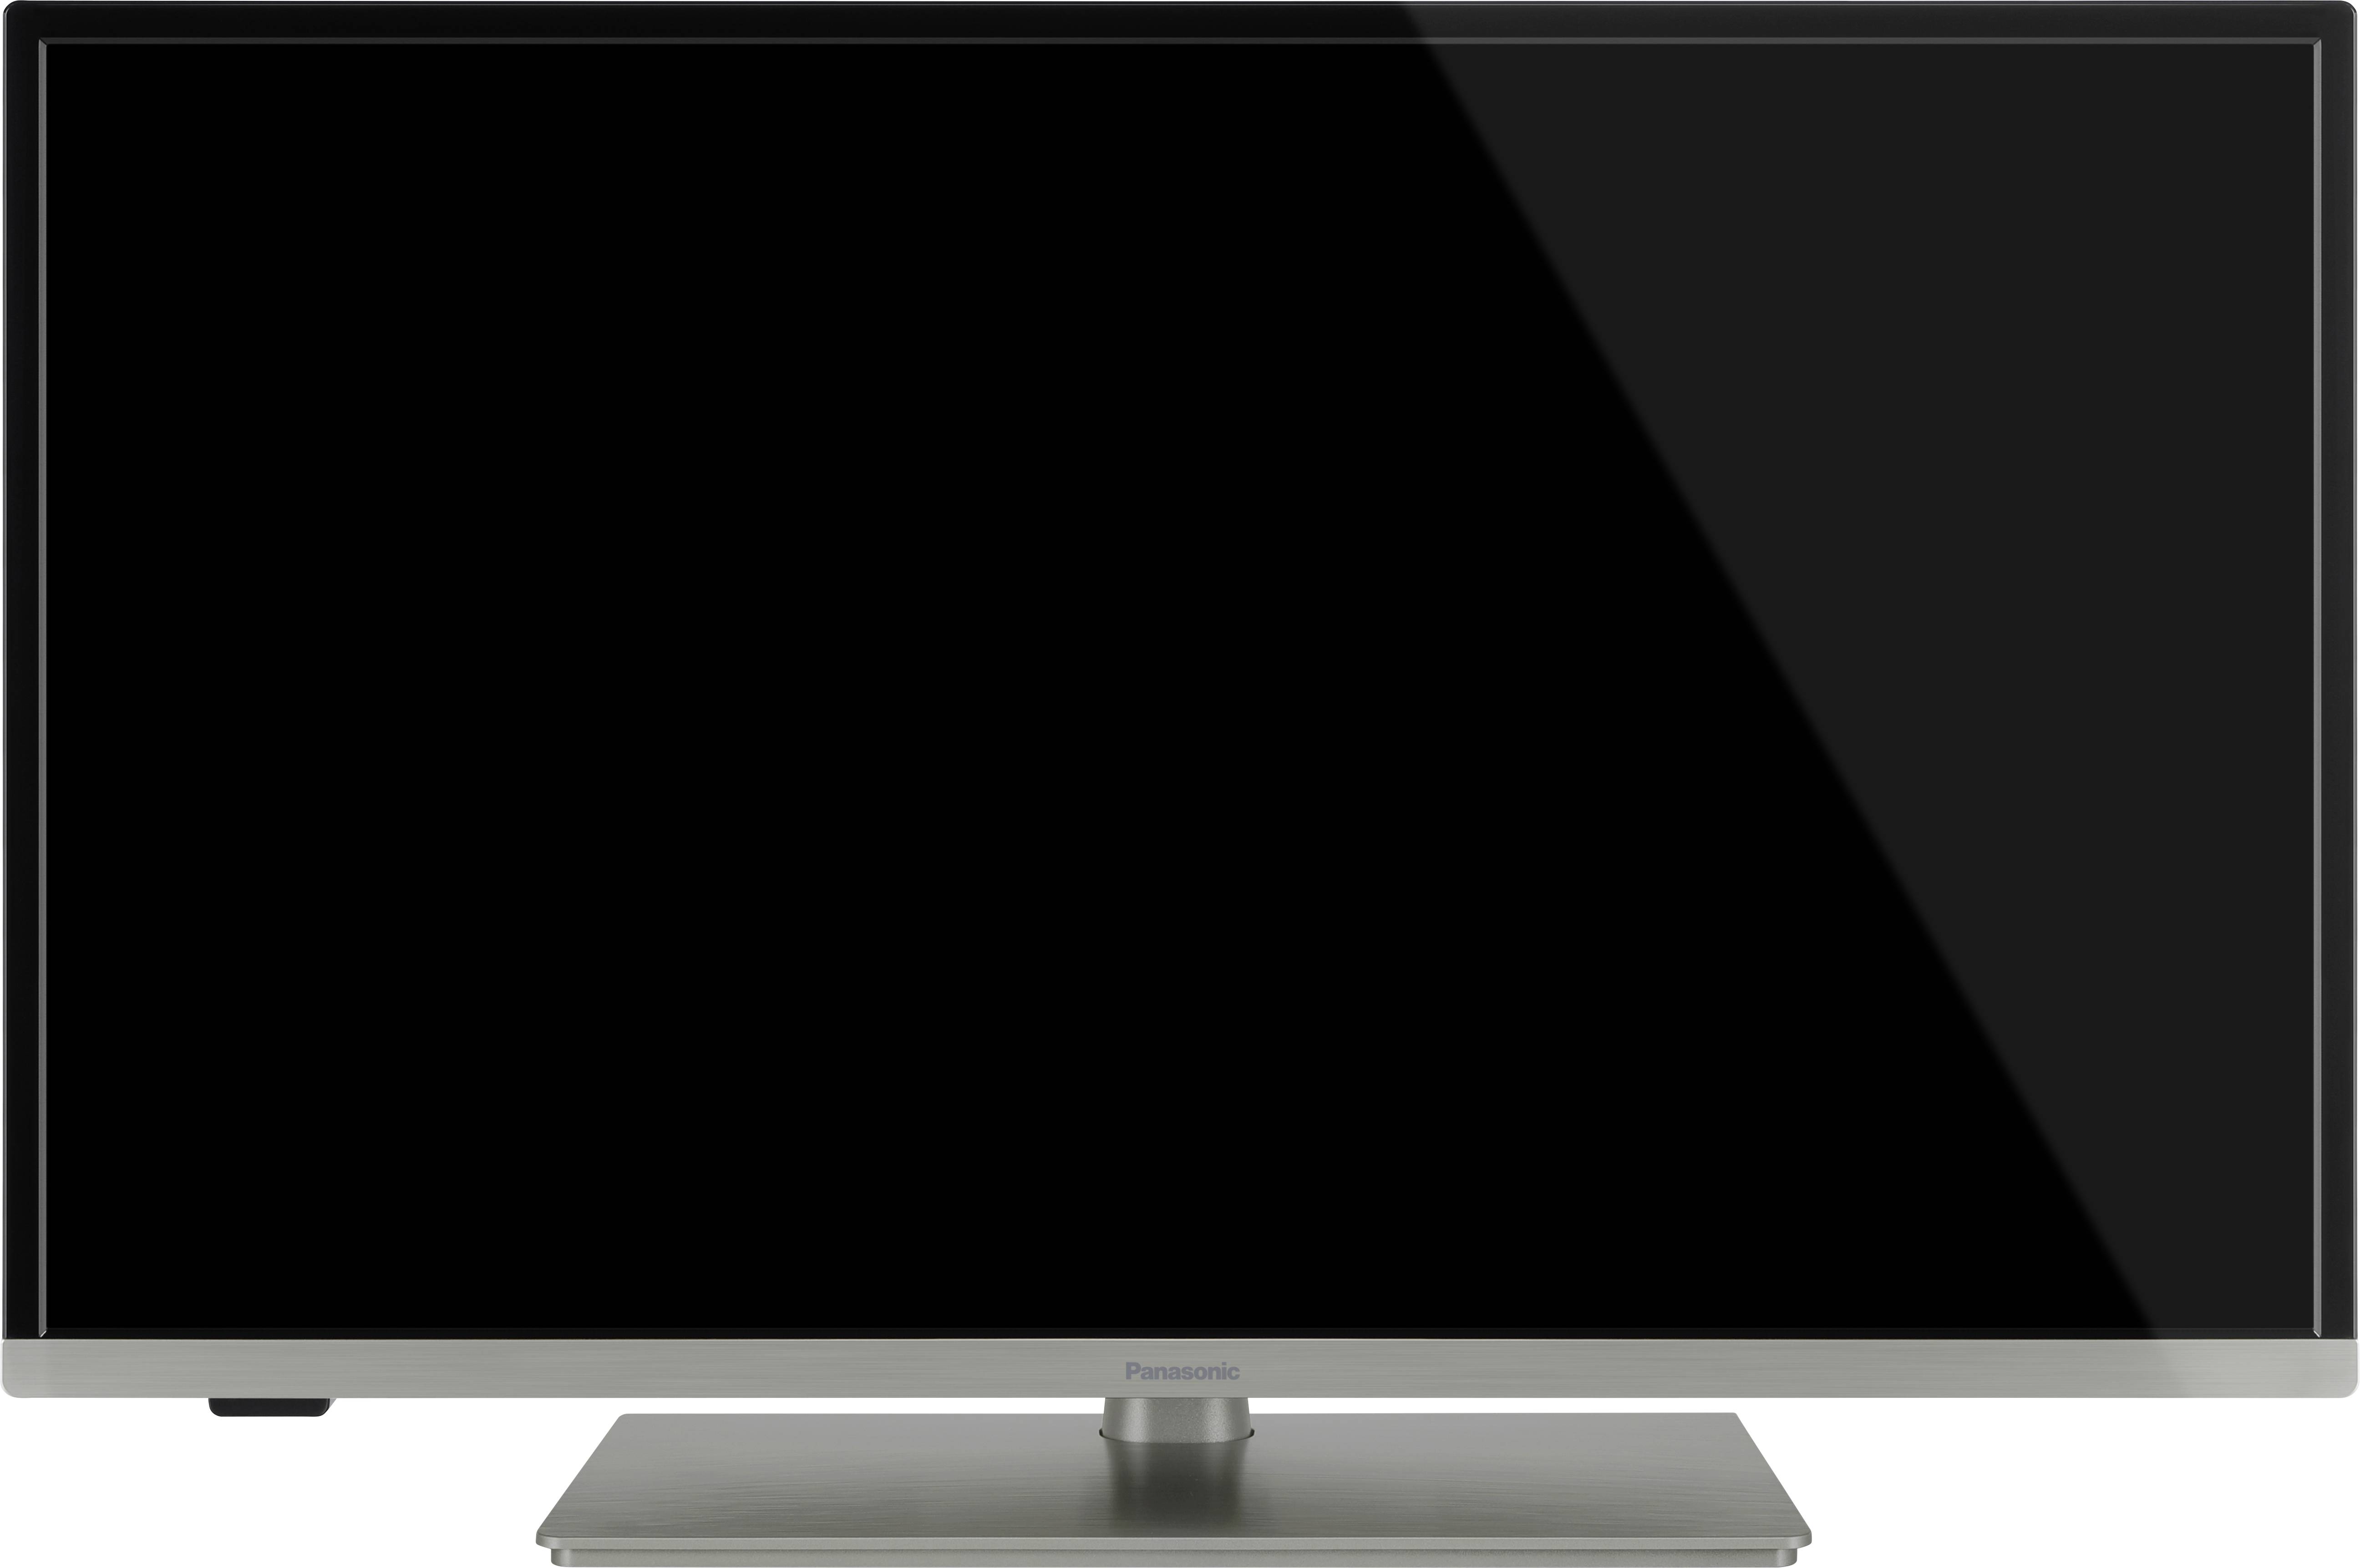 Panasonic TX-32JSW354 LED-fjernsyn cm 32 tommer EEK F - G) DVB-T2., DVB-C, DVB-S, ready, Smart TV, CI+ Sø | Conradelektronik.dk